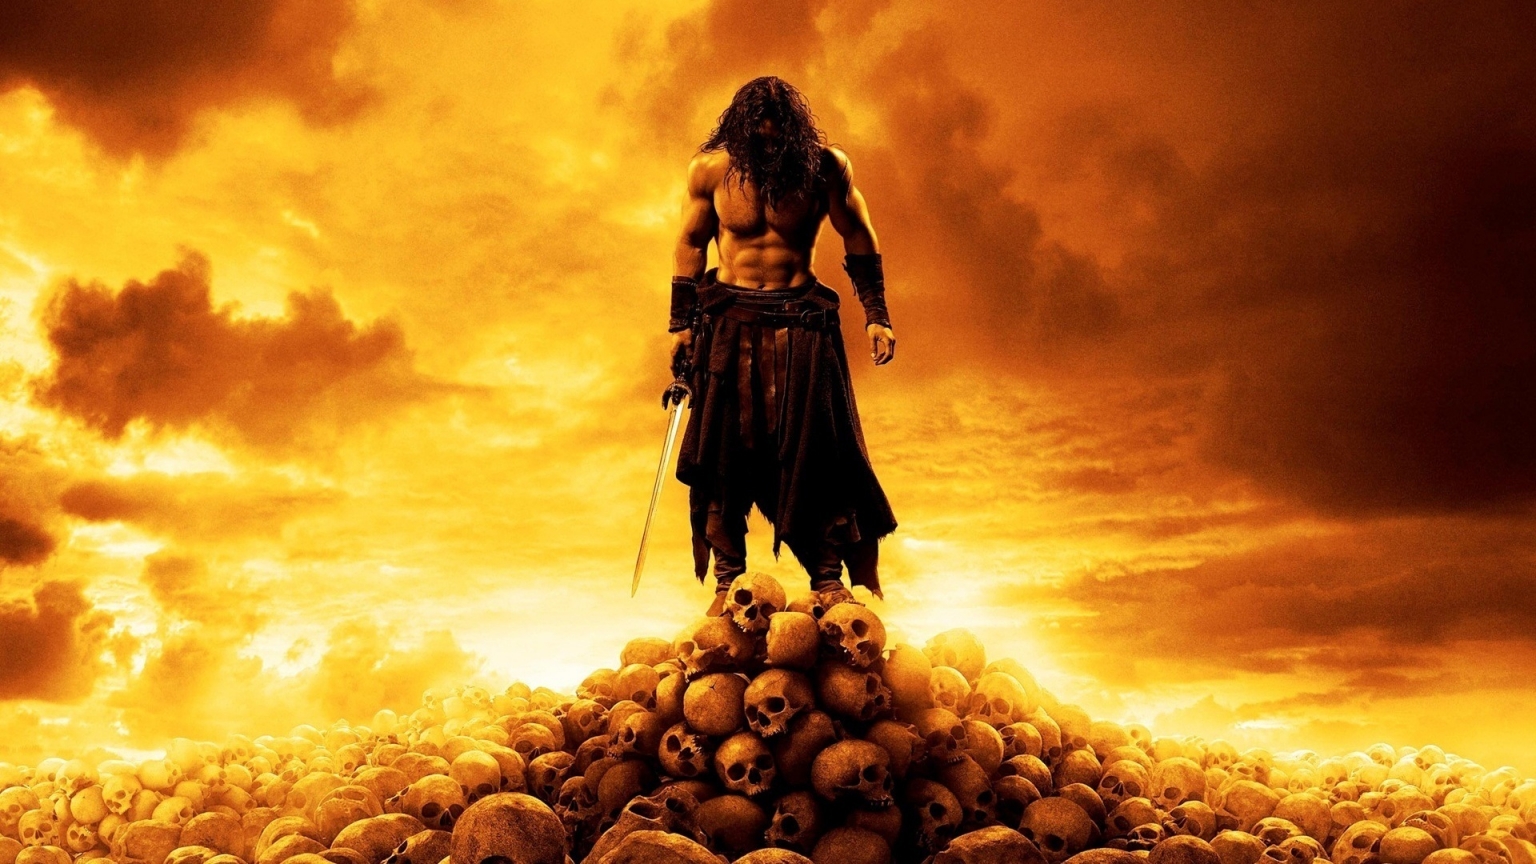 Conan the Barbarian 2011 for 1536 x 864 HDTV resolution